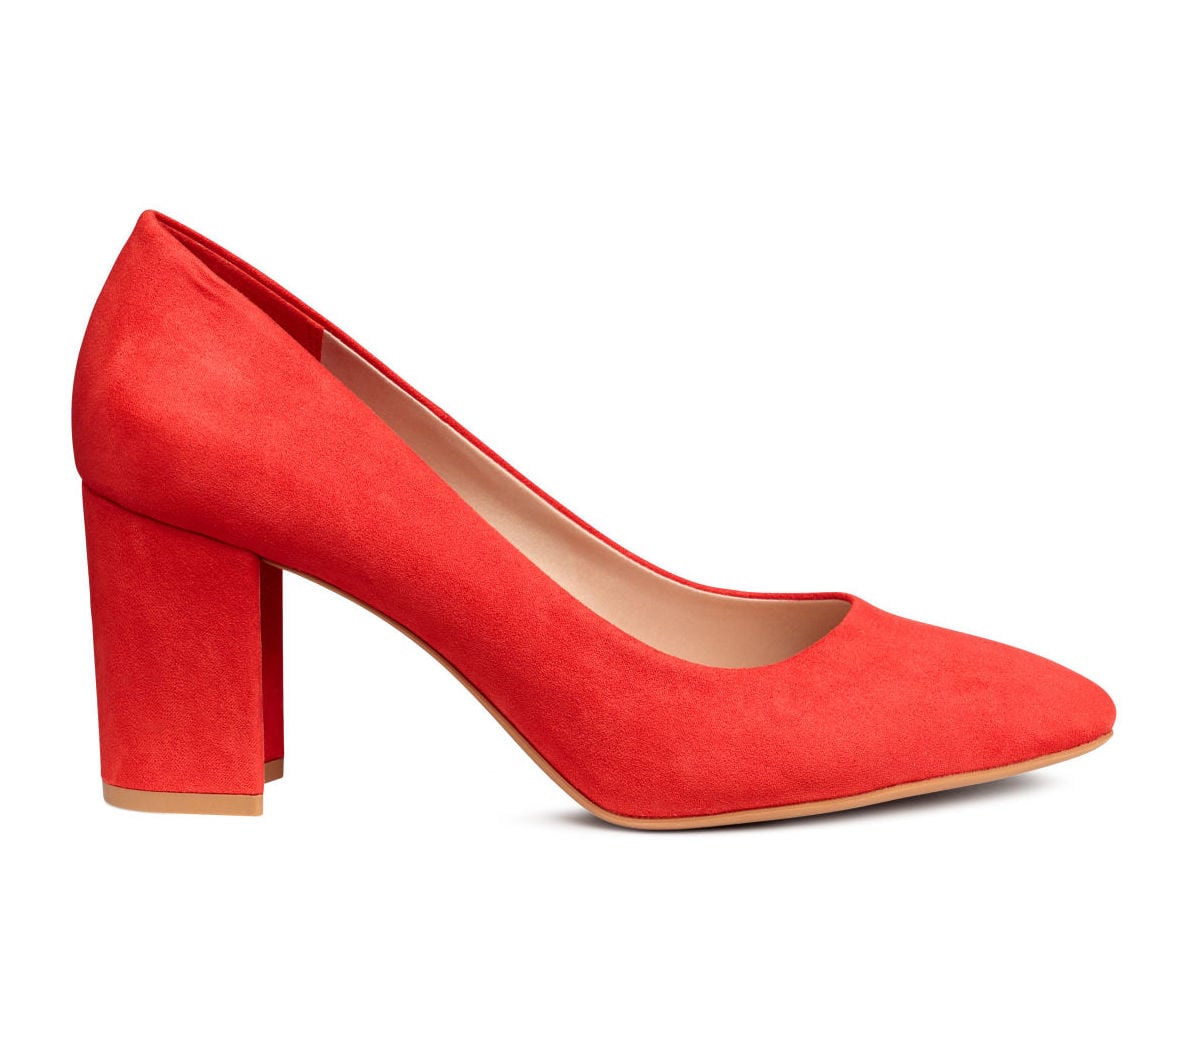 svimmel røre ved Vedhæftet fil H&M Pumps | Toss Your Boring Black Heels Aside and Wear 1 of These Red  Options Instead | POPSUGAR Fashion Photo 4